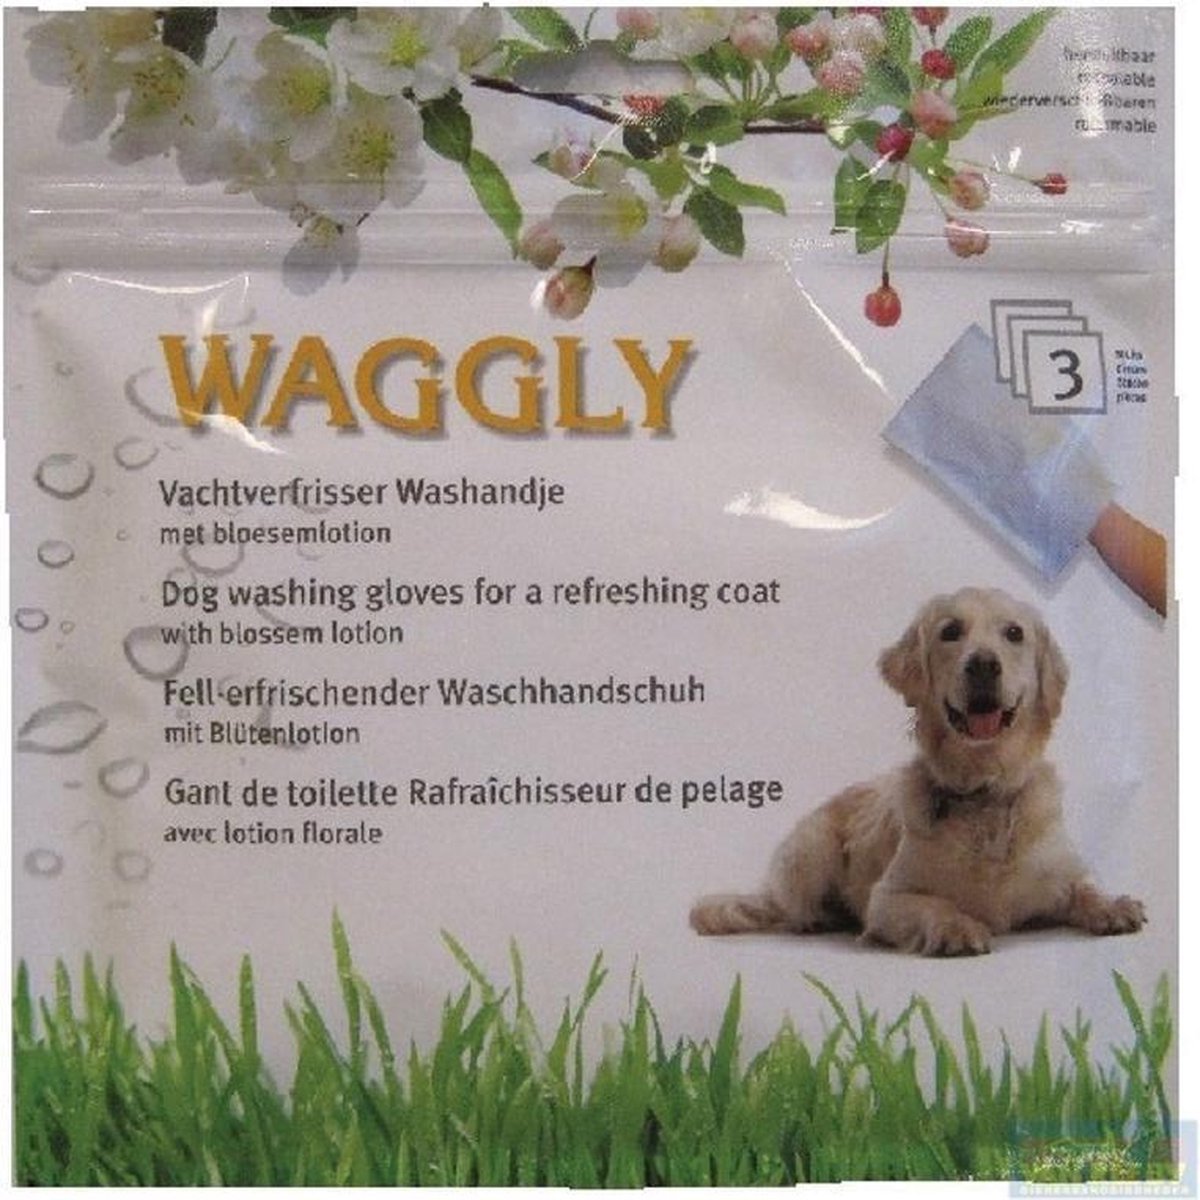 Waggly Vachtverfrisser Washand - Hond - Met bloesemlotion - 3 x 3 washandjes  | bol.com